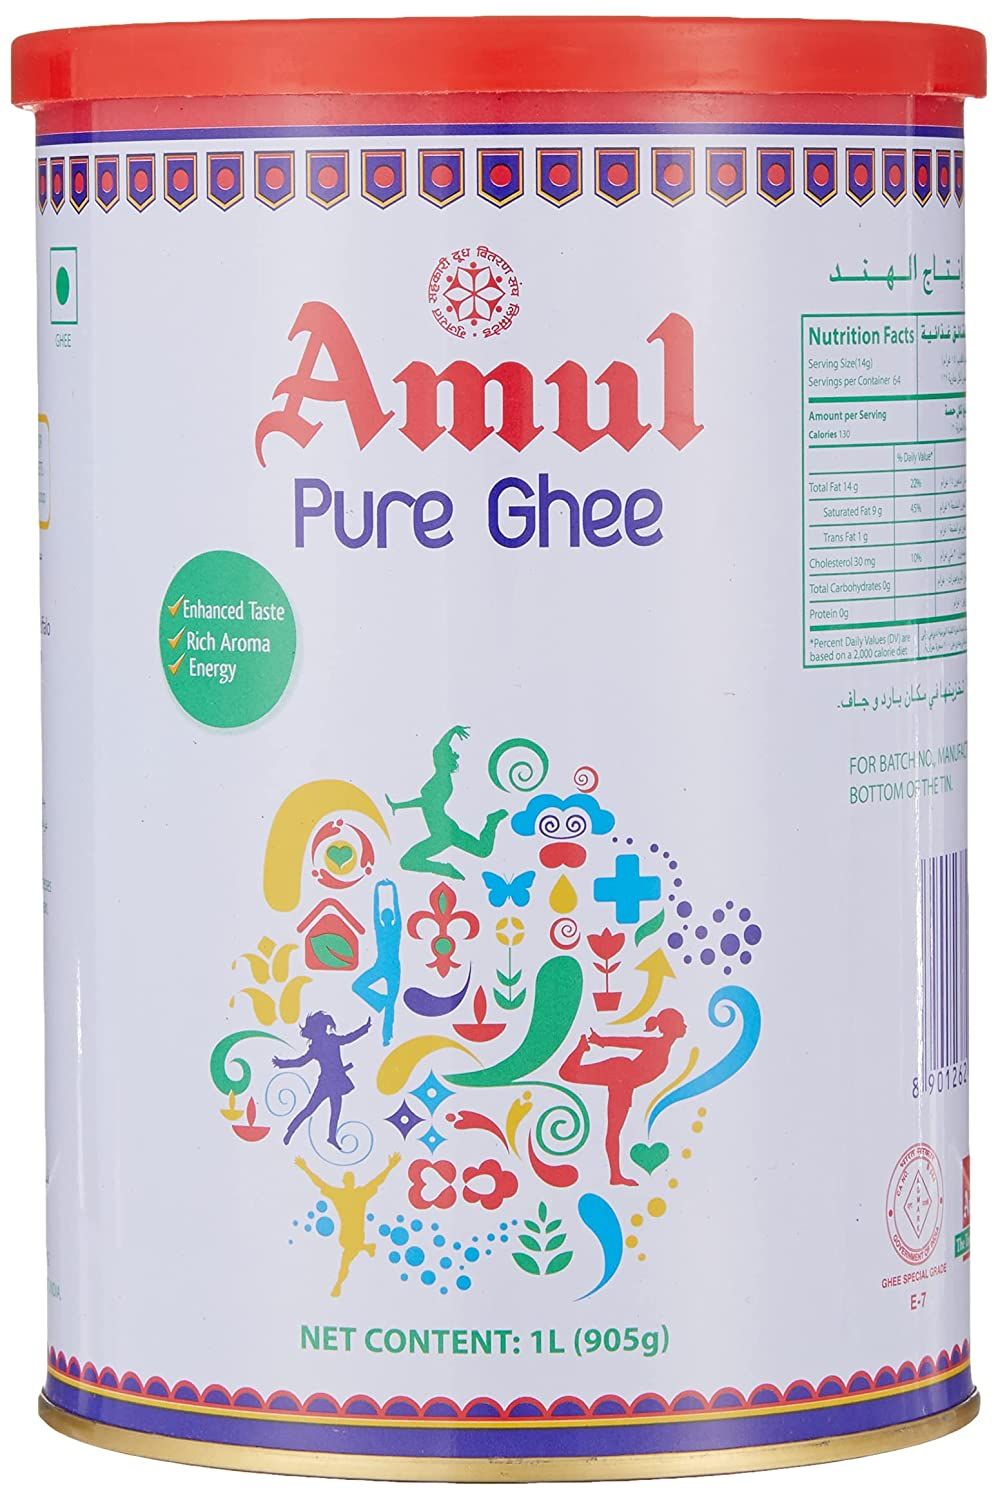 Amul Pure Ghee Image